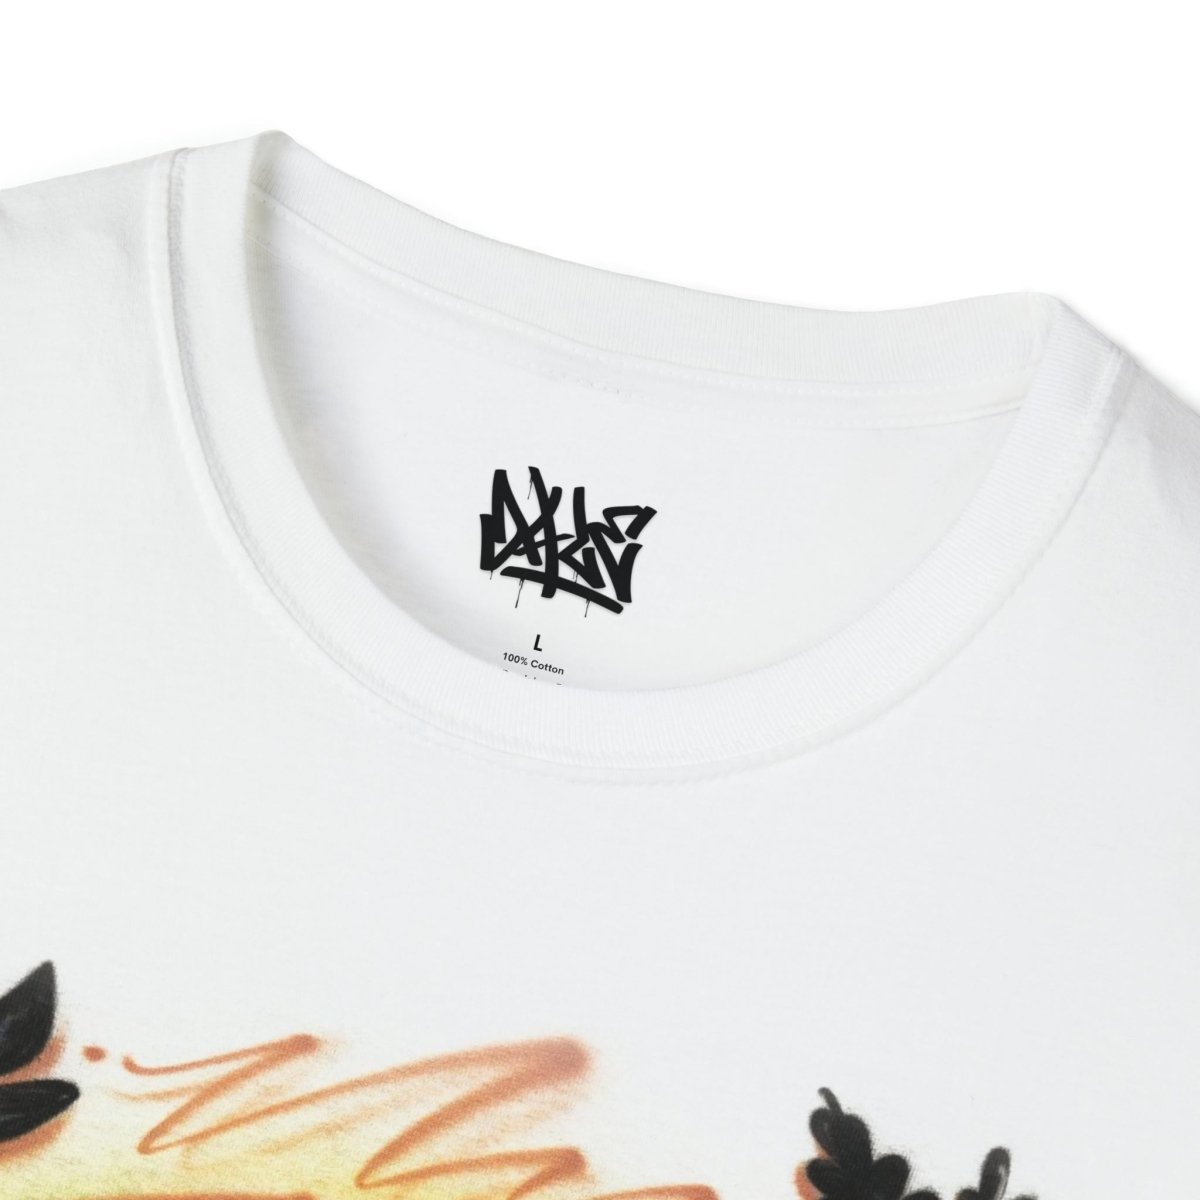 Arsenal Graffiti Style Shirt Customizable Airbrush T shirt Design from Airbrush Customs x Dale The Airbrush Guy